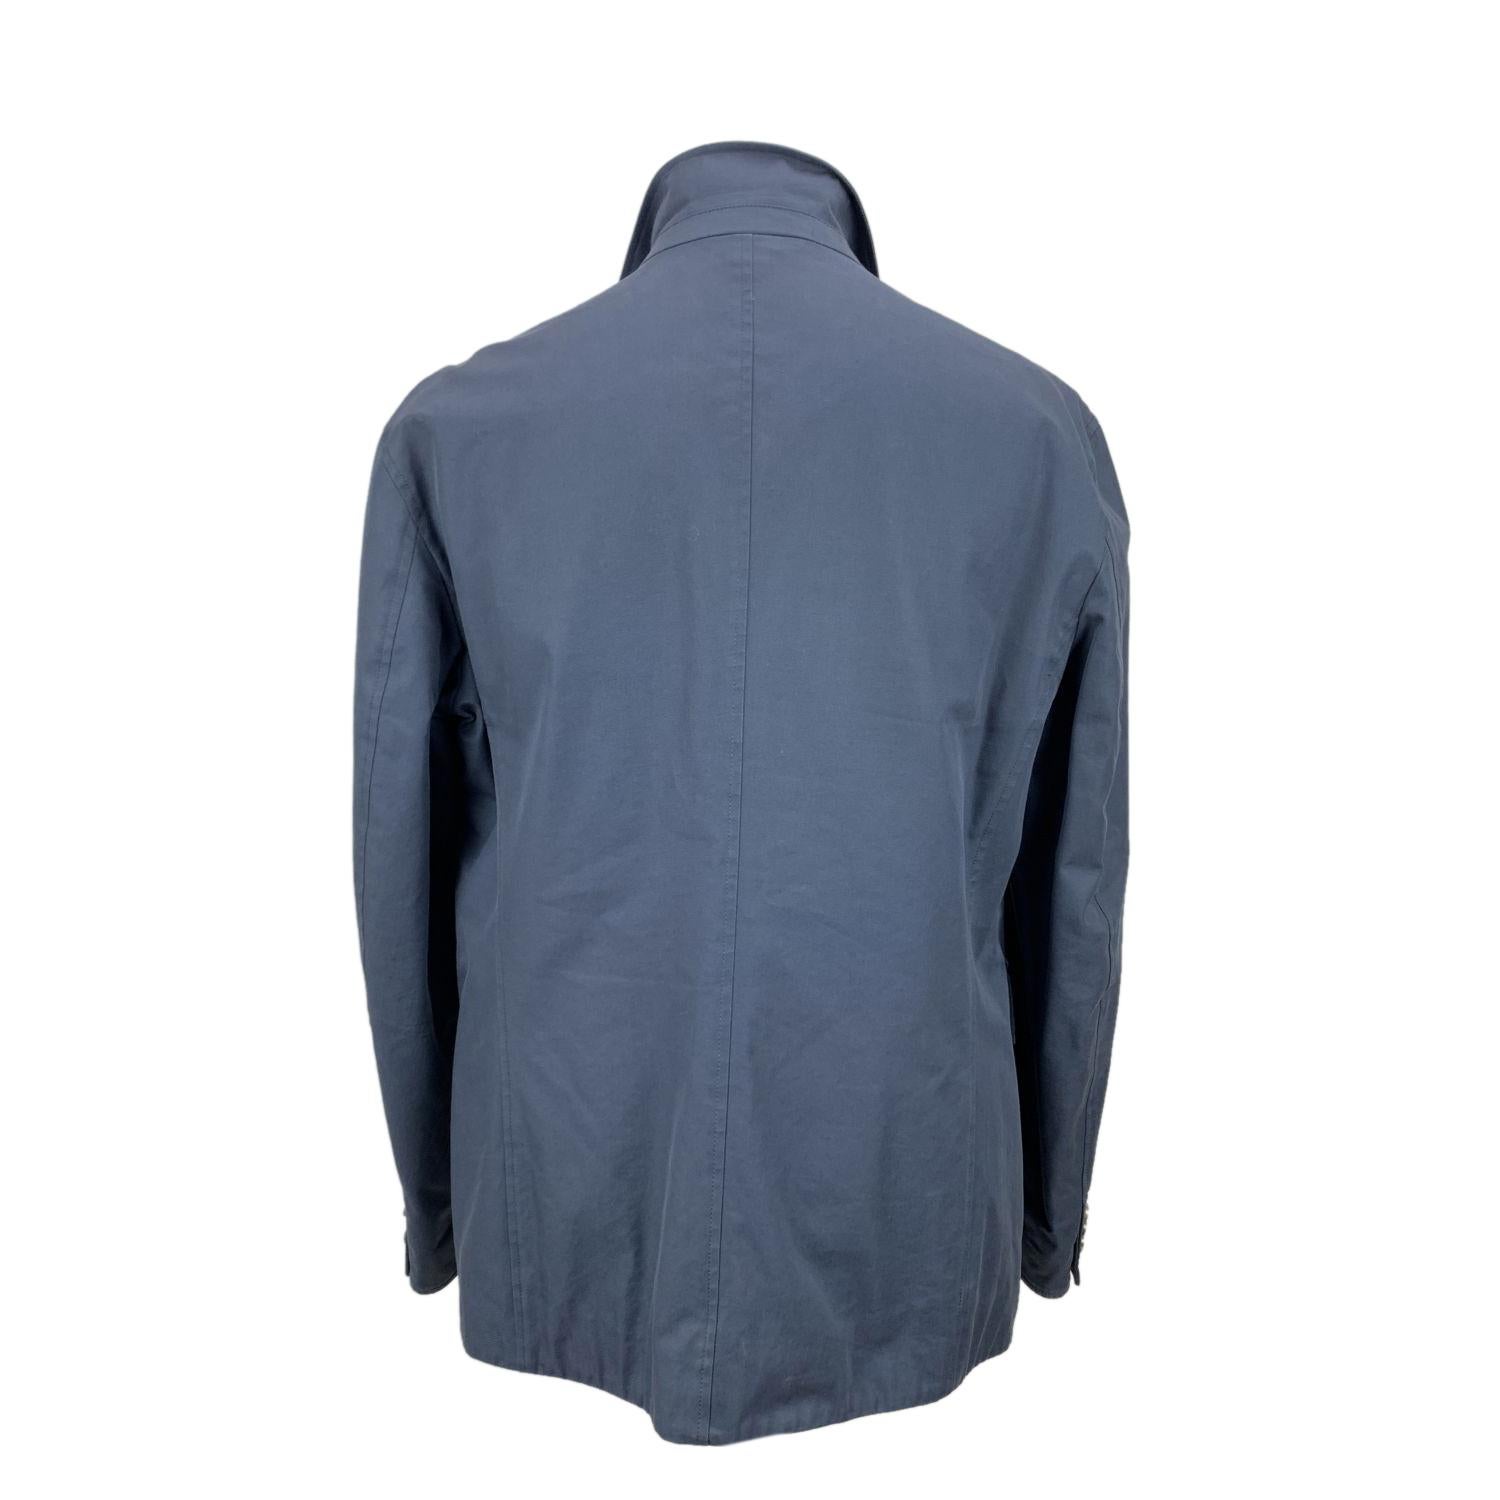 Gray Gucci Light Blue Cotton Men Zip Jacket with Pockets Size 54 IT